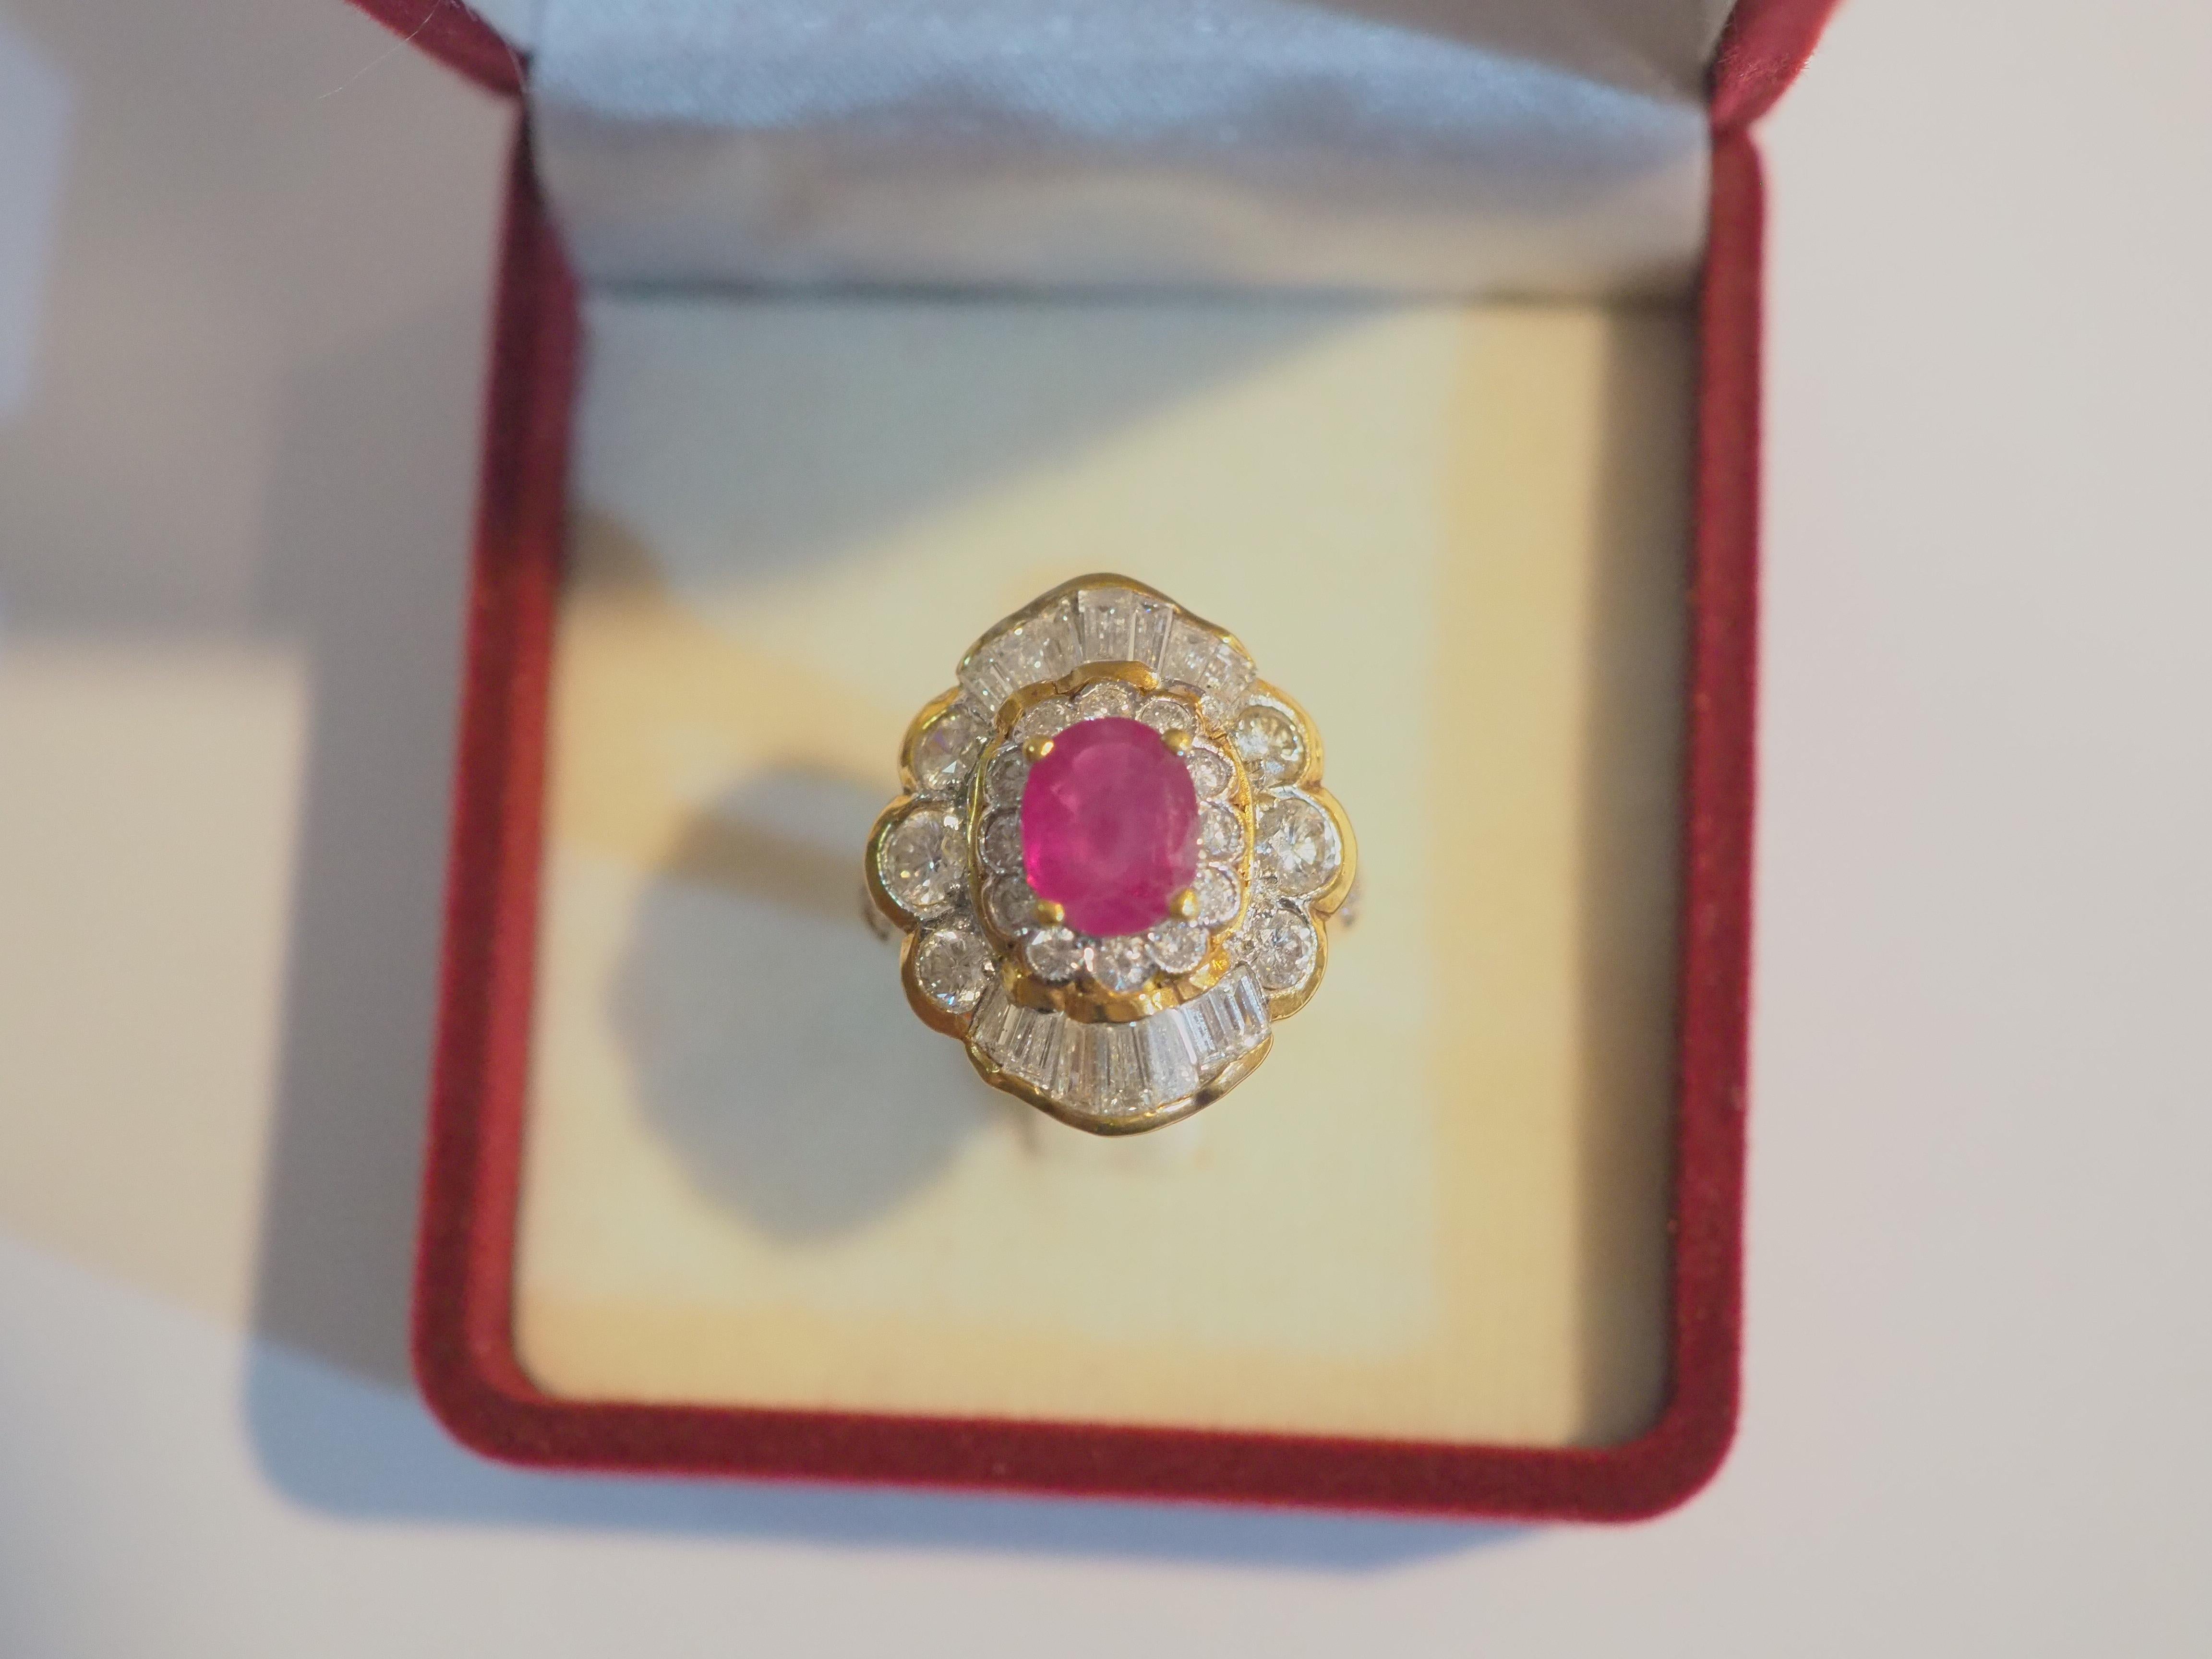 18k Gold 1.06 Carat Oval Burma Ruby & 1.41 Carat Diamond Cocktail Ring For Sale 2